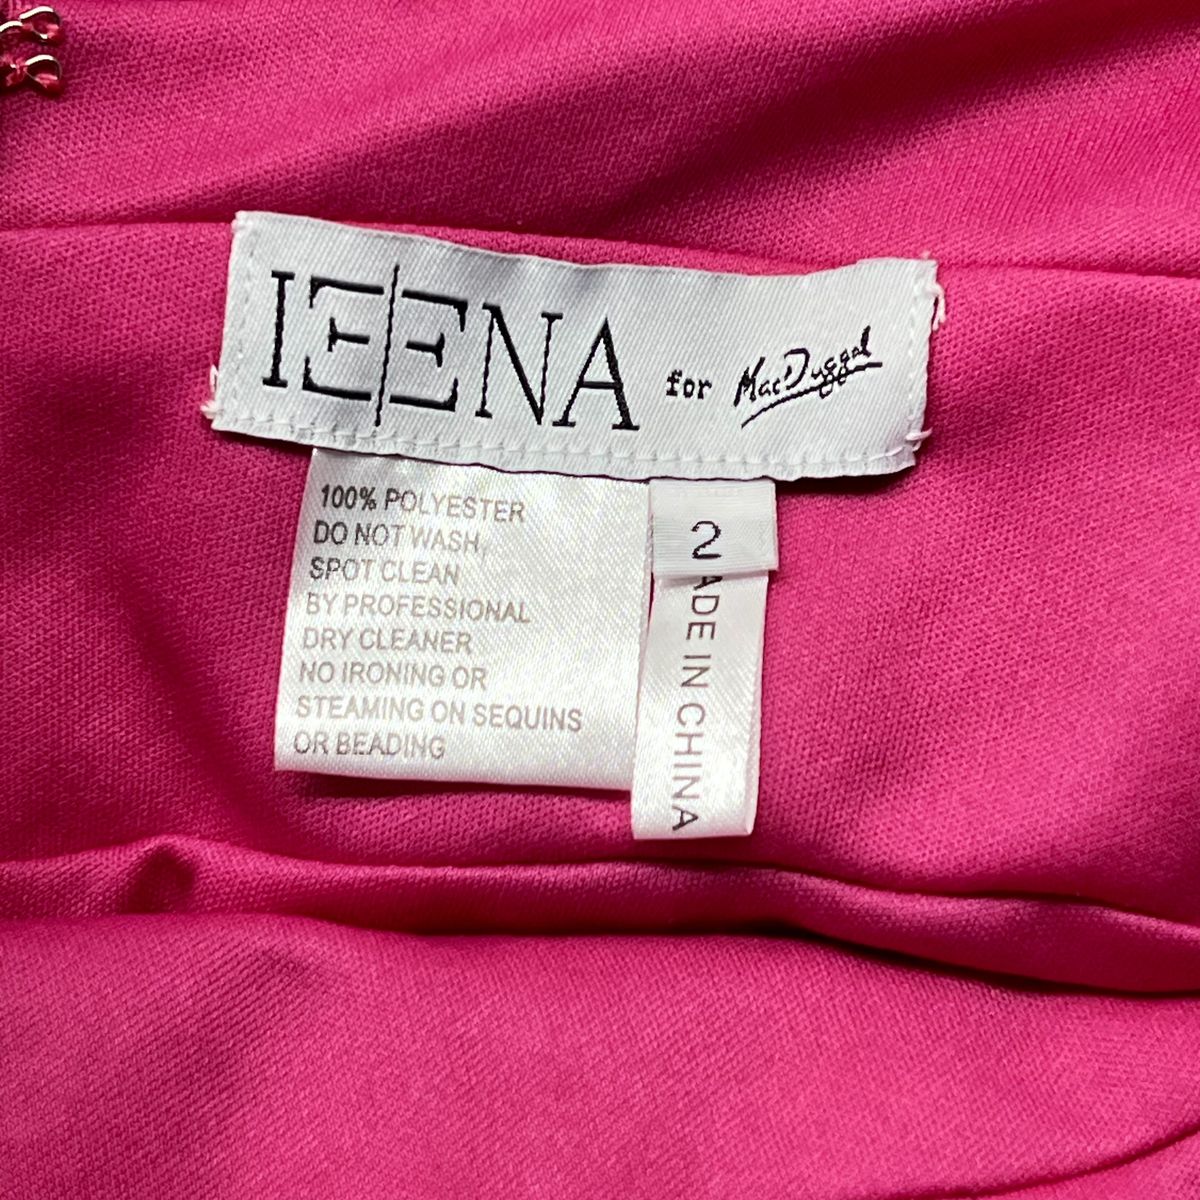 Mac Duggal Size 2 Plunge Pink Side Slit Dress on Queenly